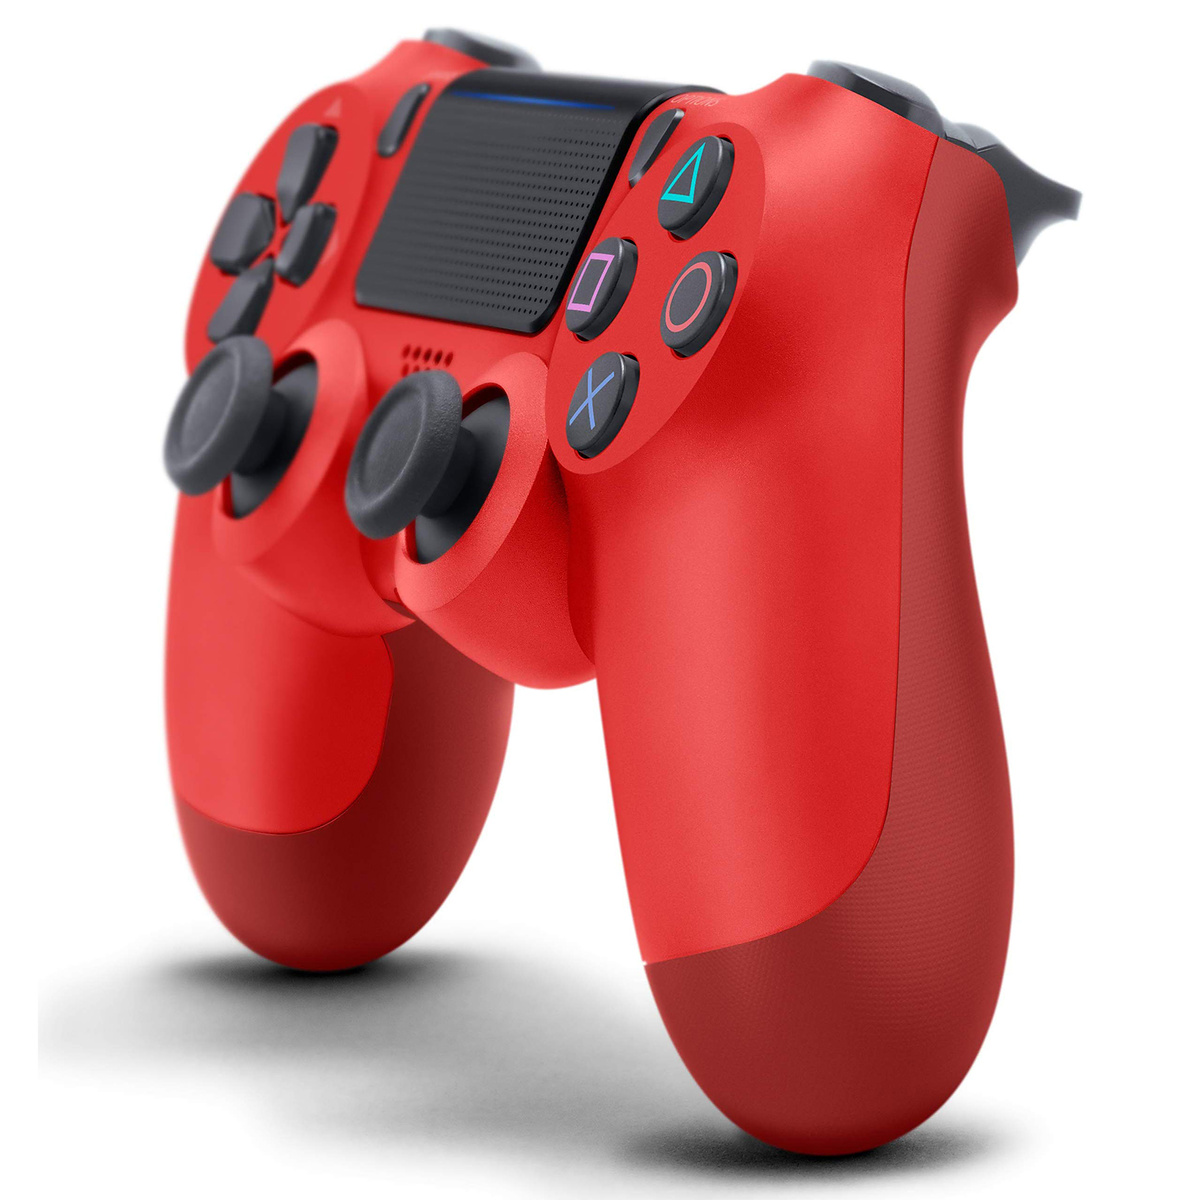 PS4 trådlös handkontroll, röd